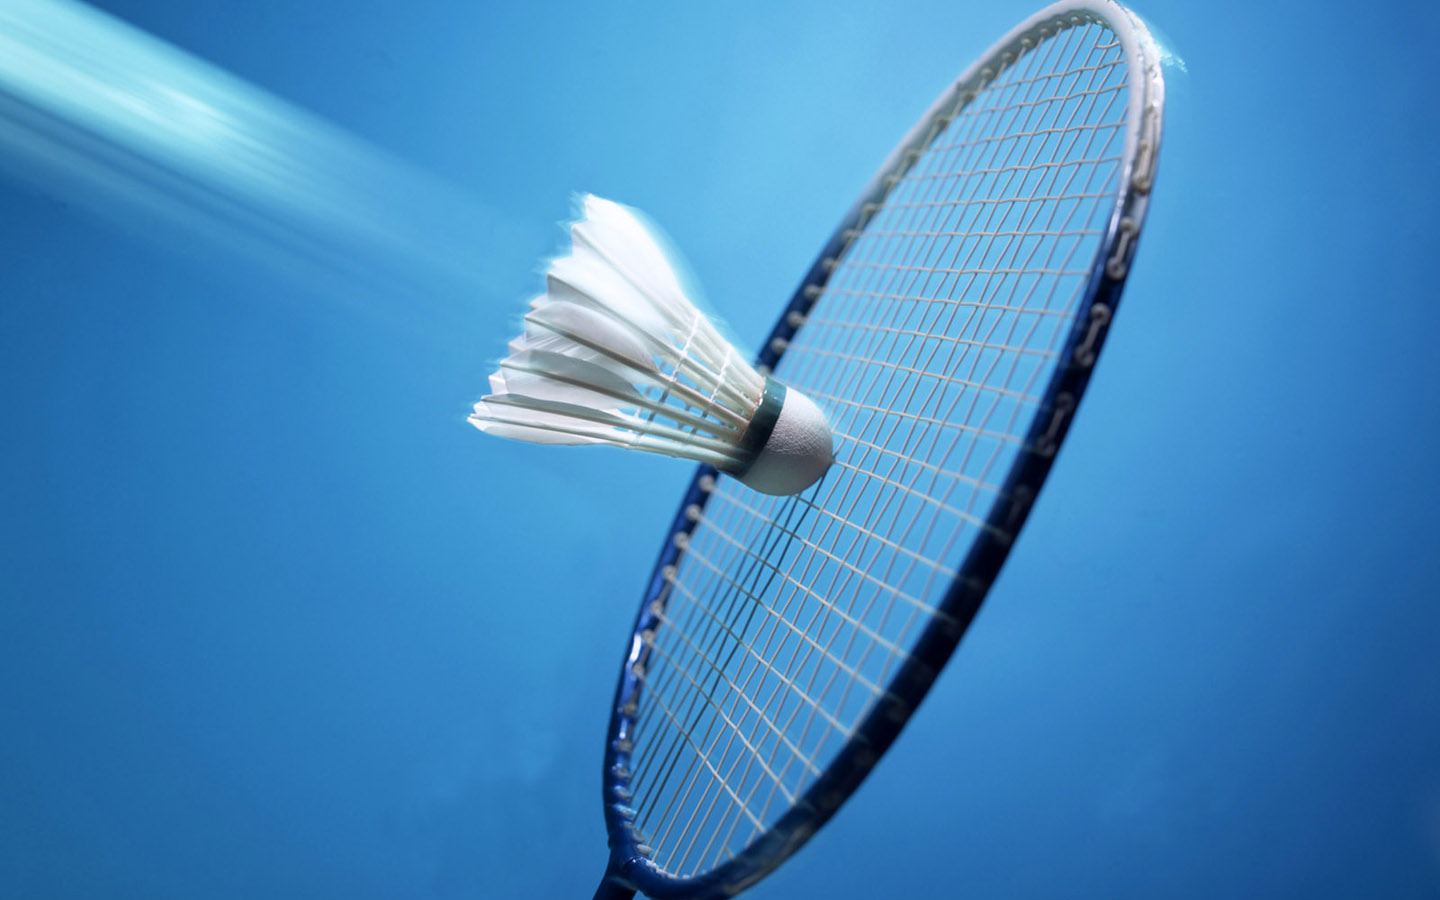 Interclubs de Badminton